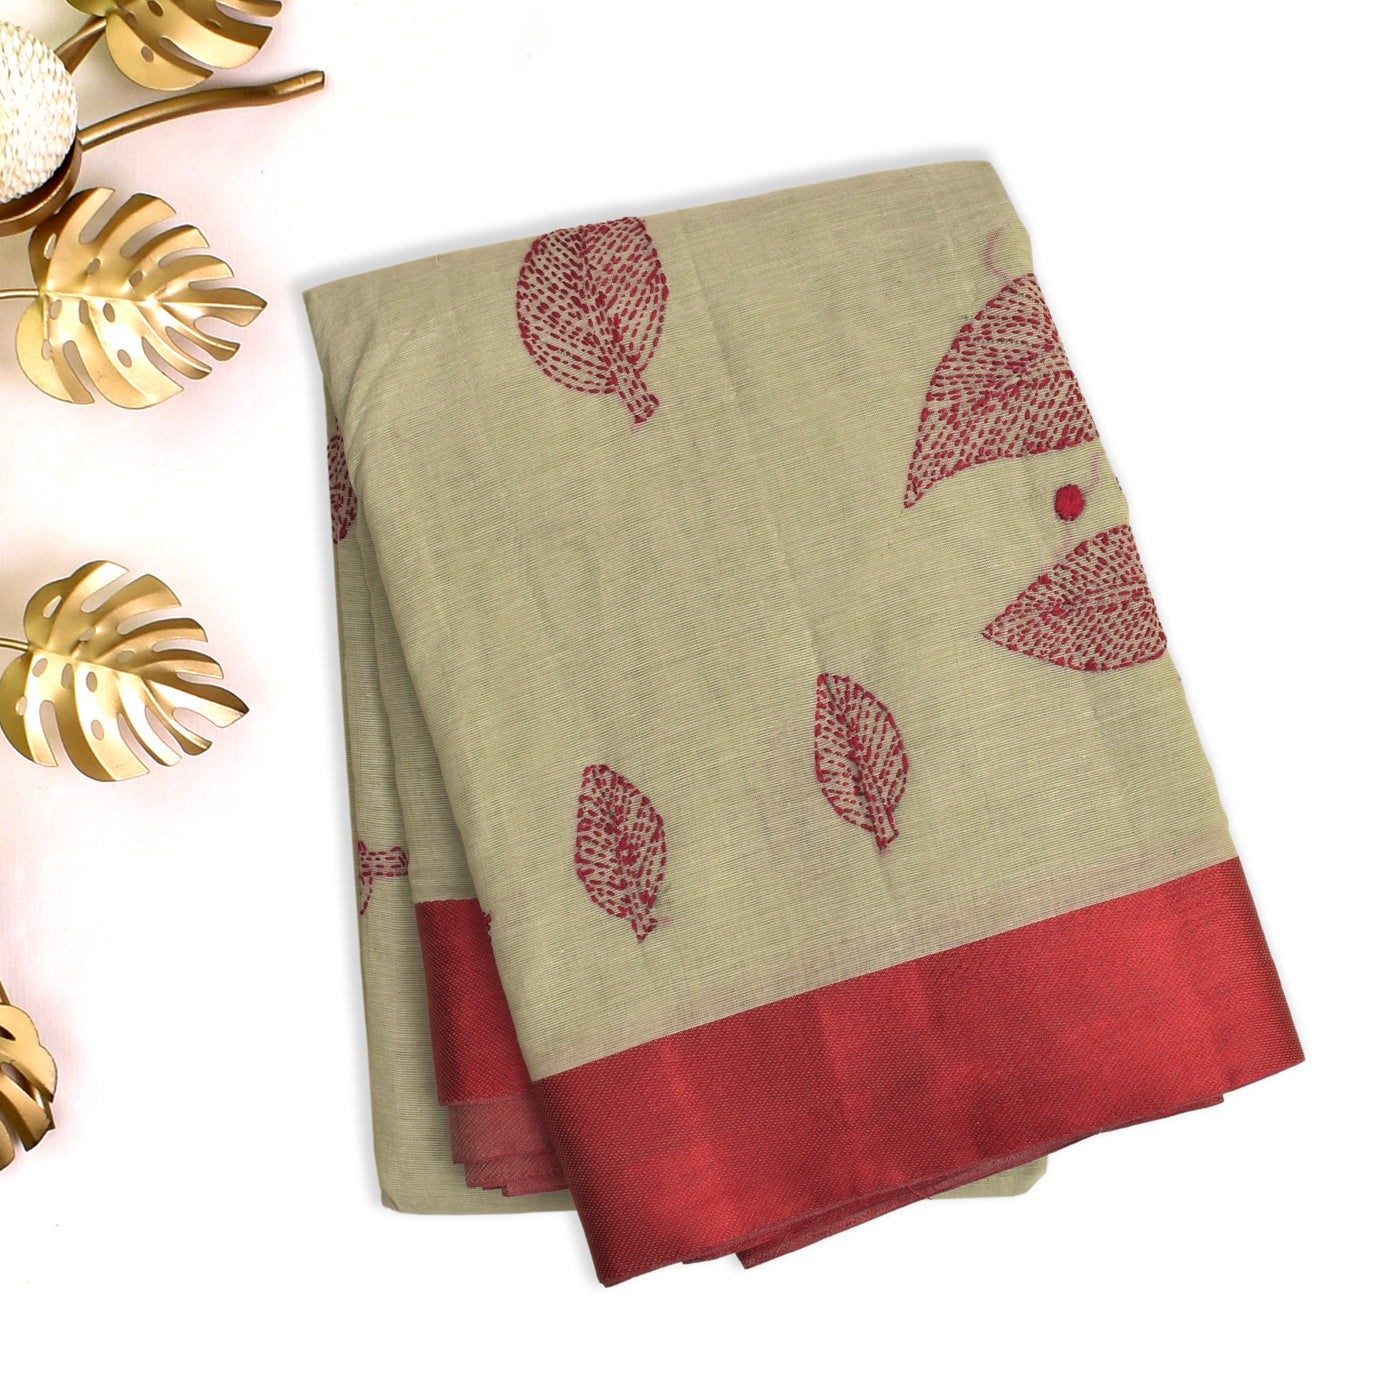 Off White Cotton Saree with Red Kantha Work Design